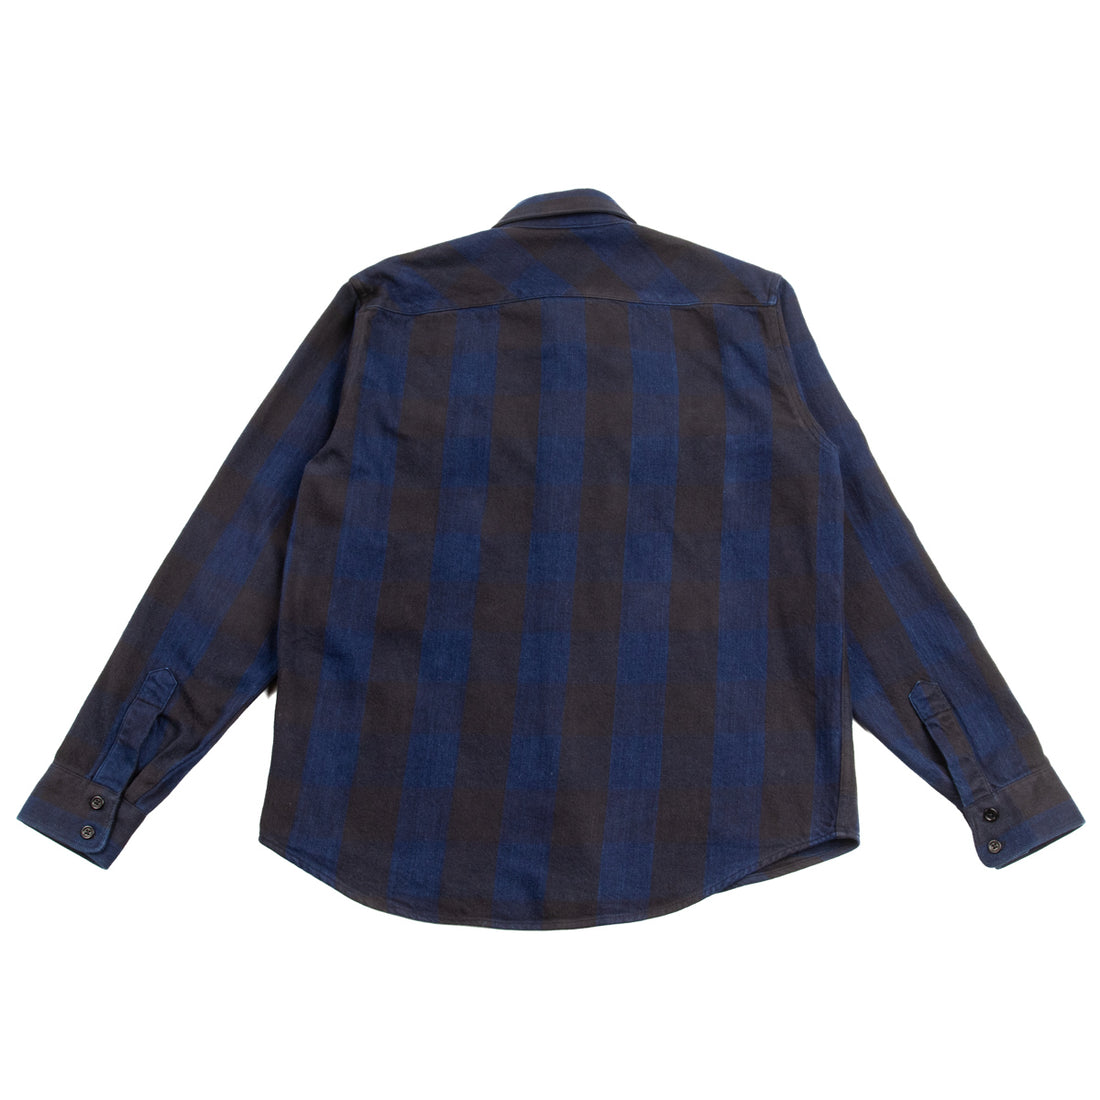 Indigofera Norris Shirt - Black / Indigo Flannel - Standard & Strange